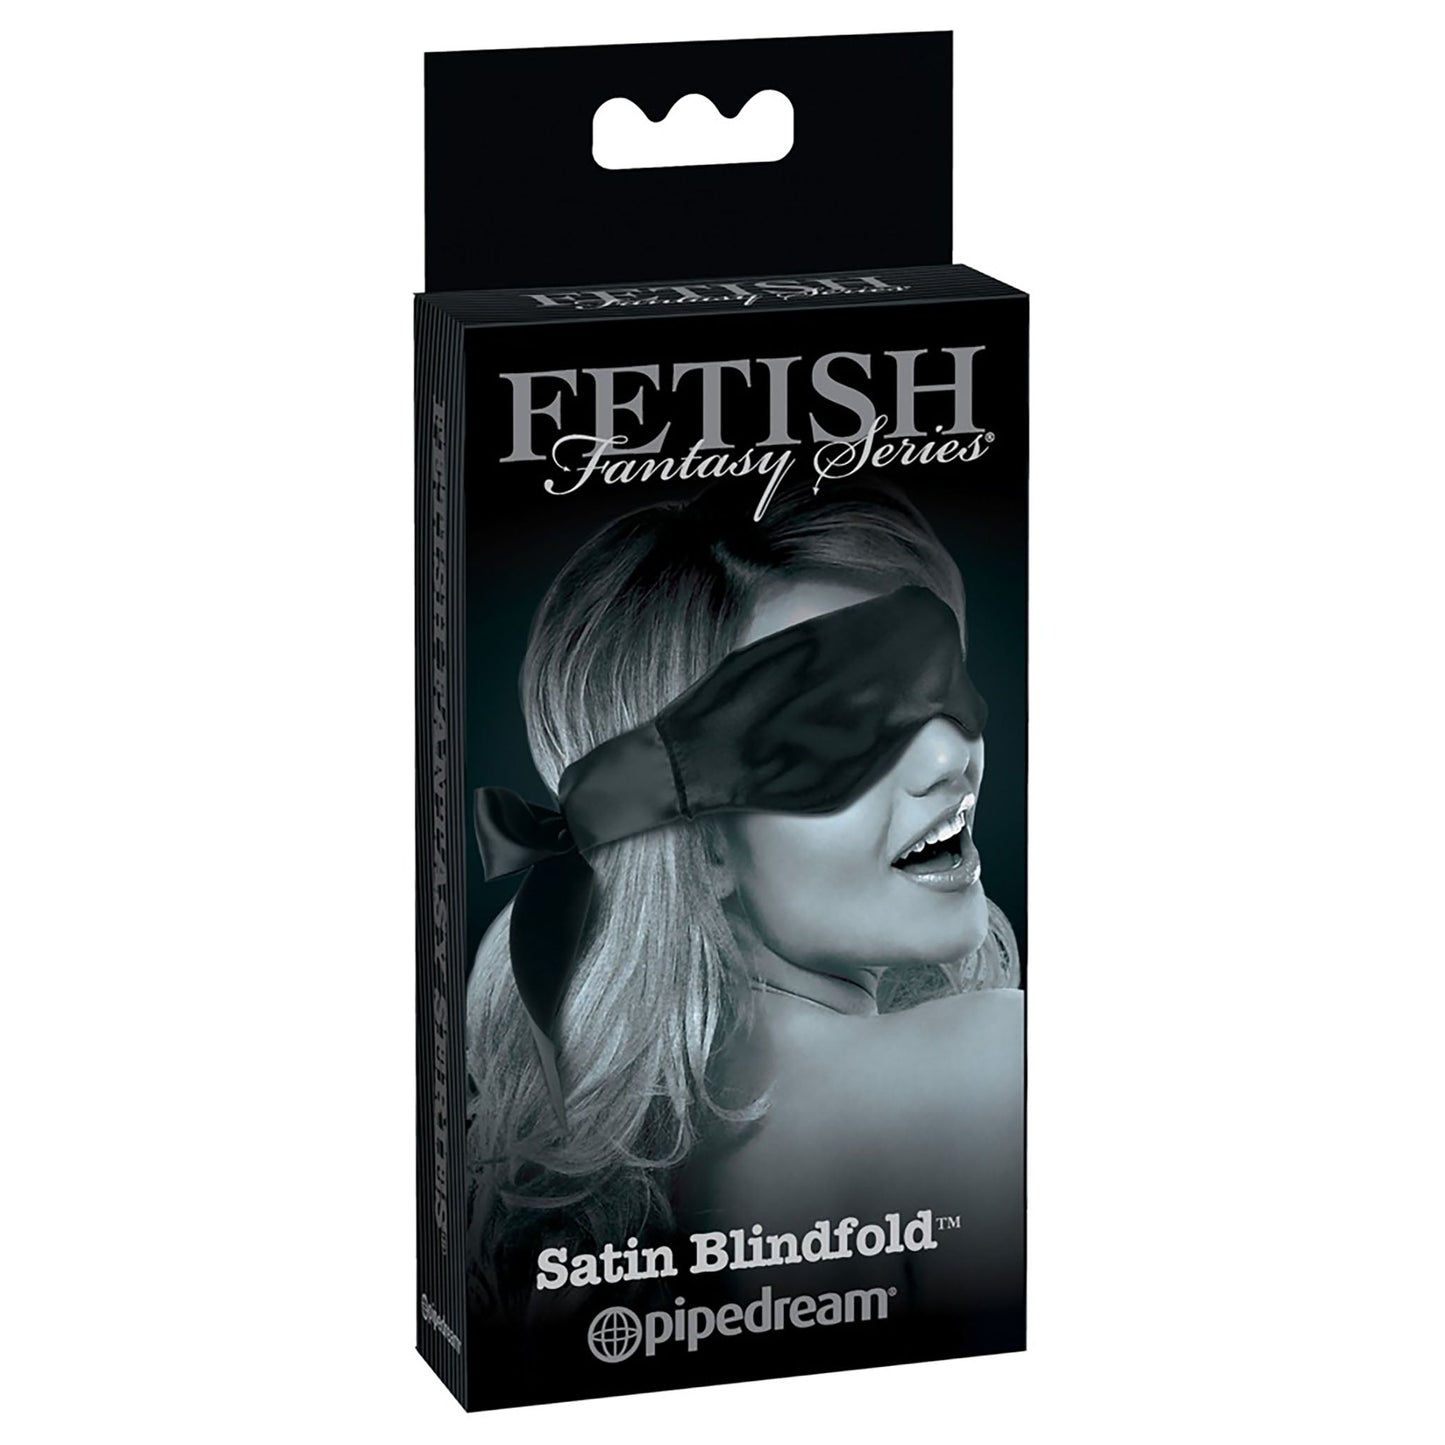 Satin Blindfold Augenmaske in schwarz in Verpackung